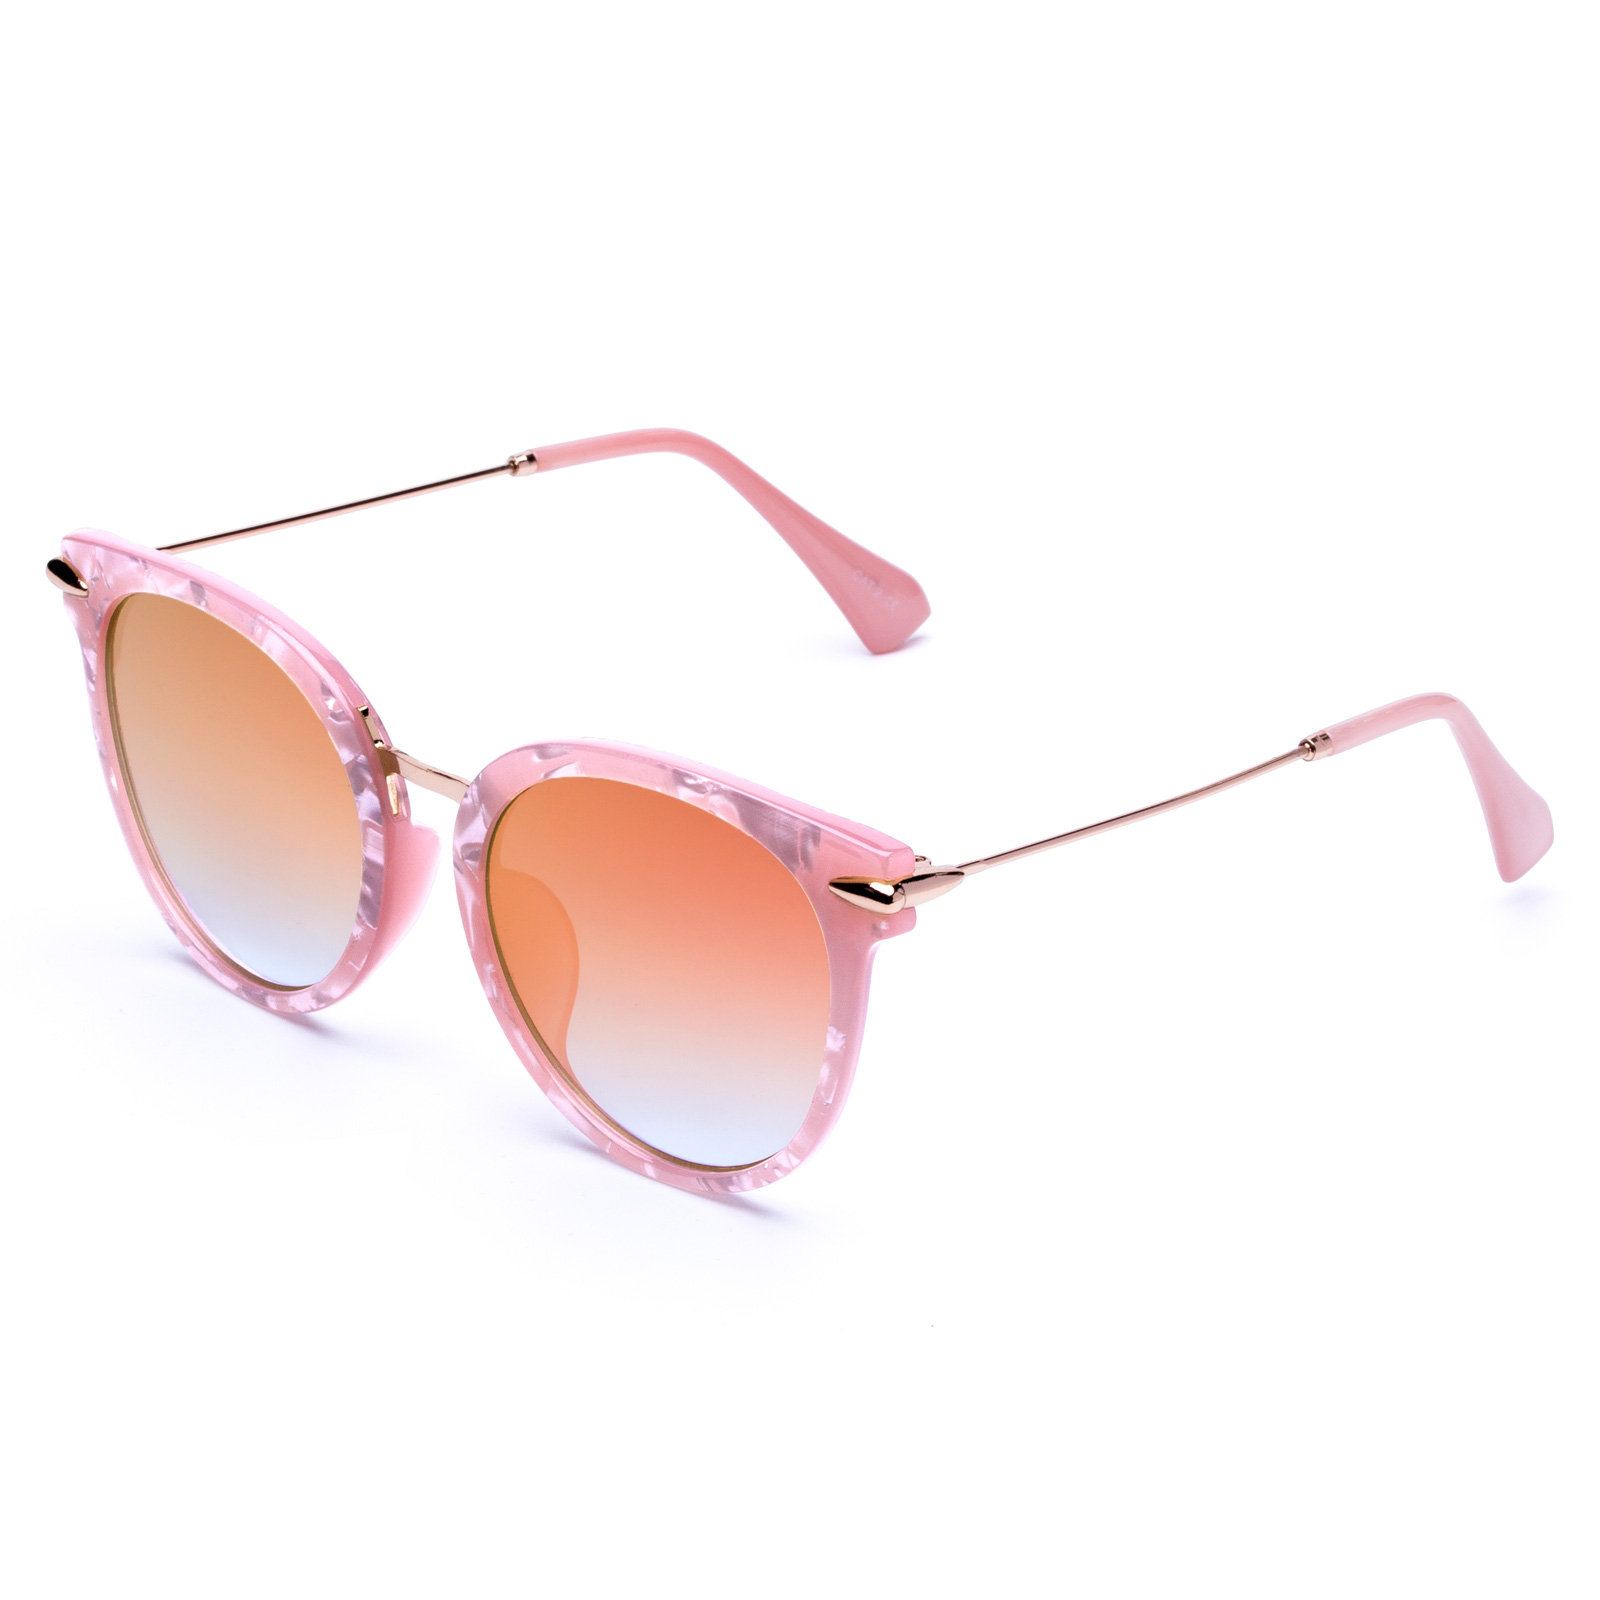 Sunglasses for Women, Vintage Round Style, 100% UV Blocking Driving Sun Glasses